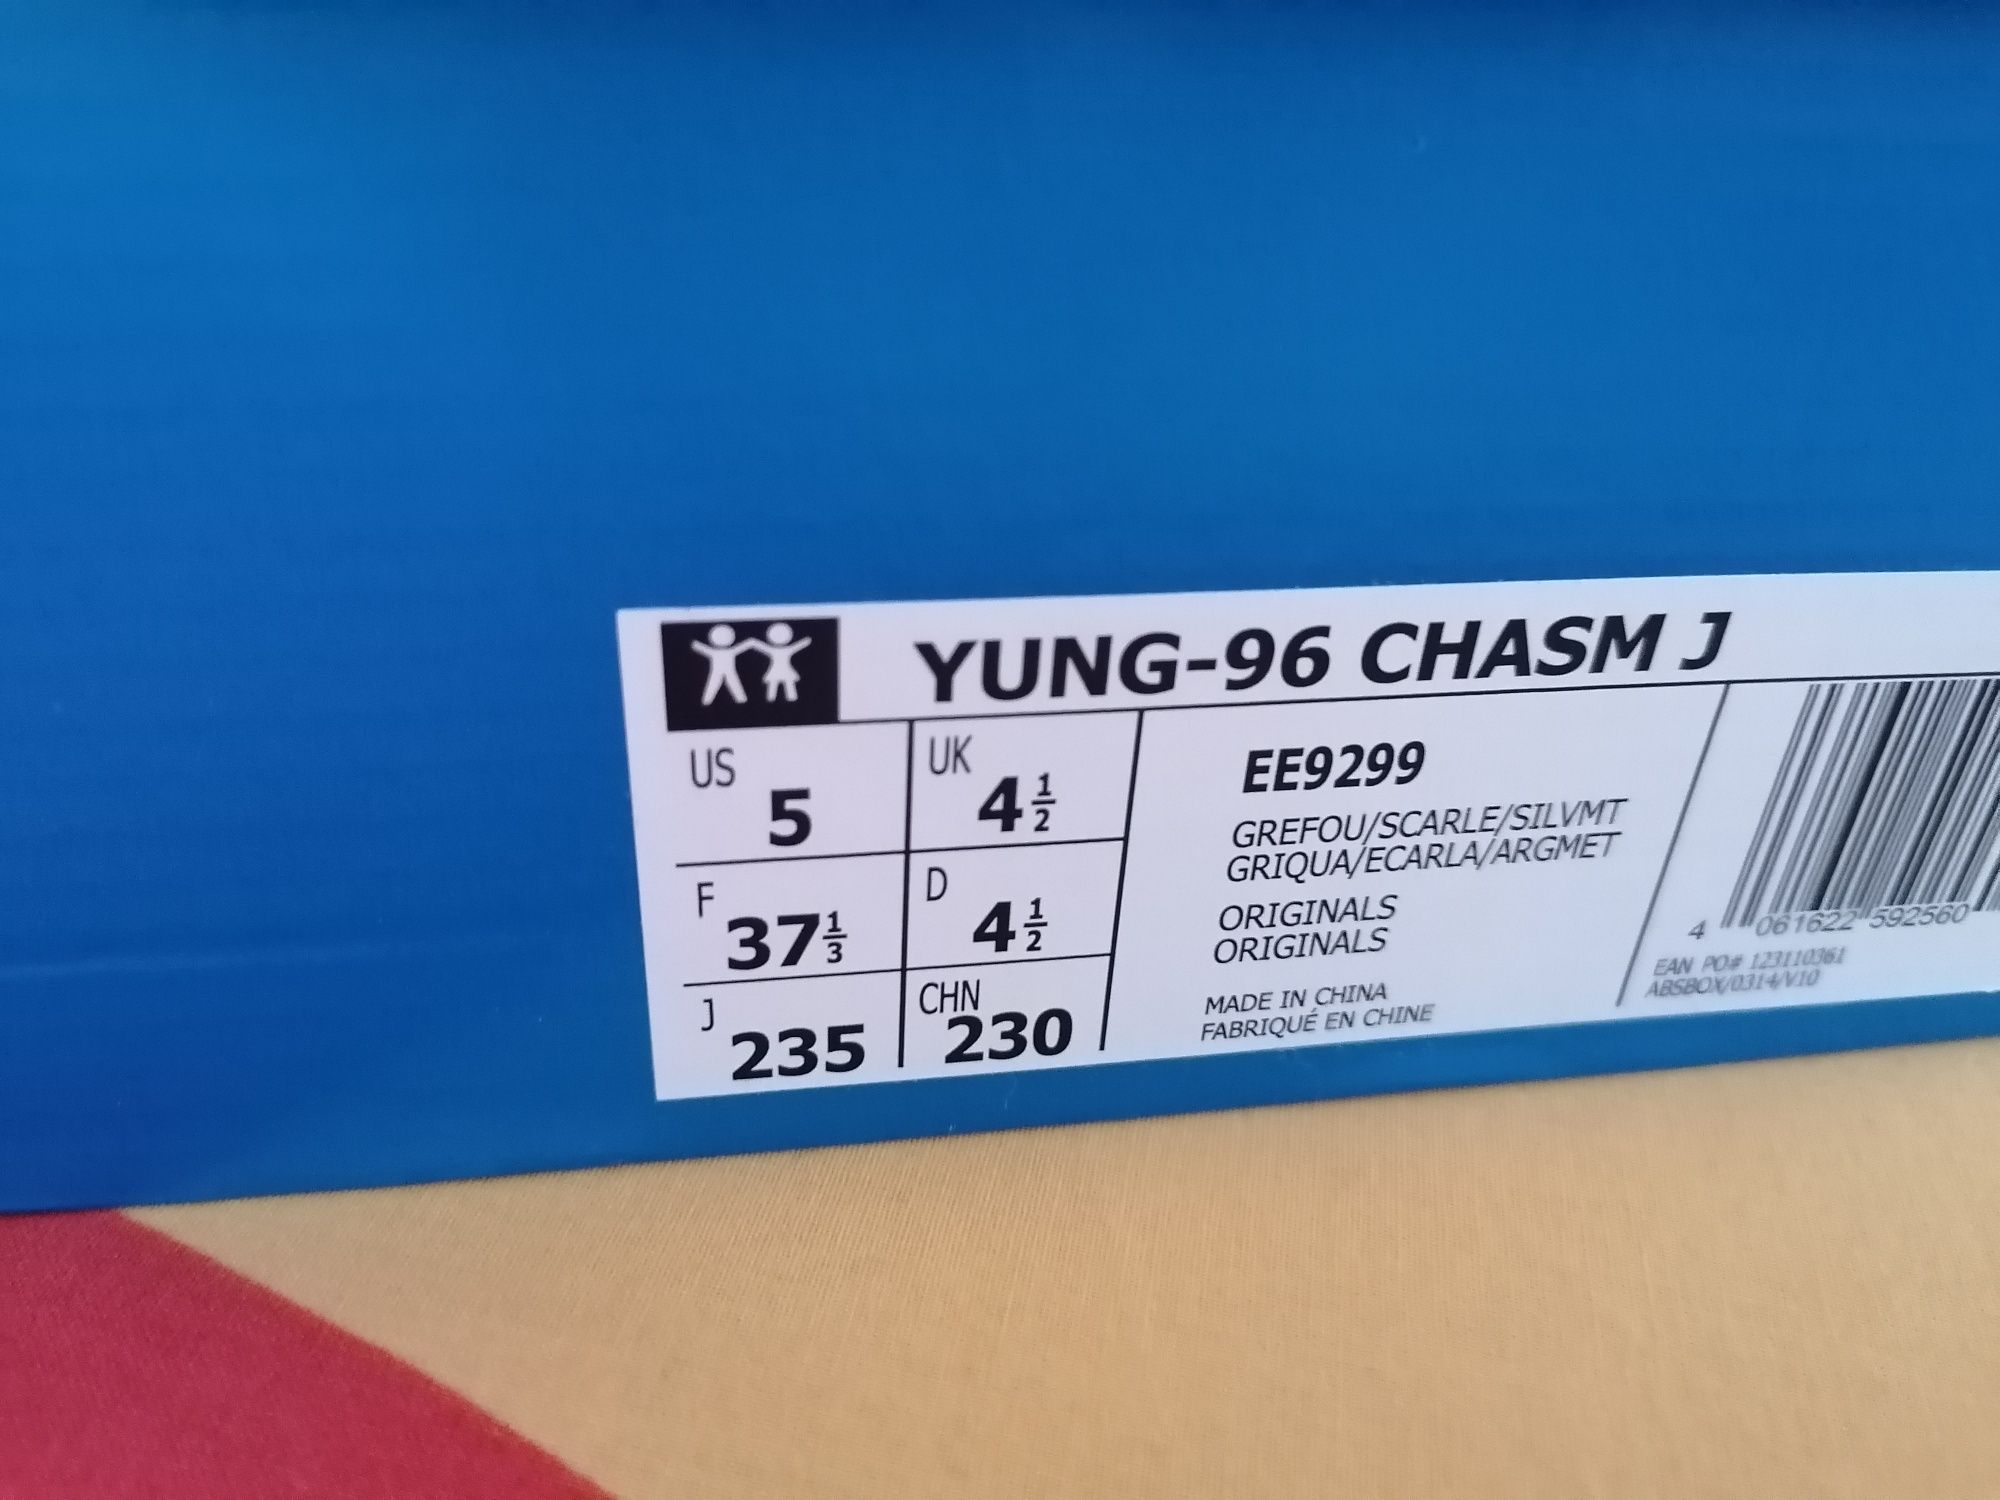 Adidas yung 96 chasm j